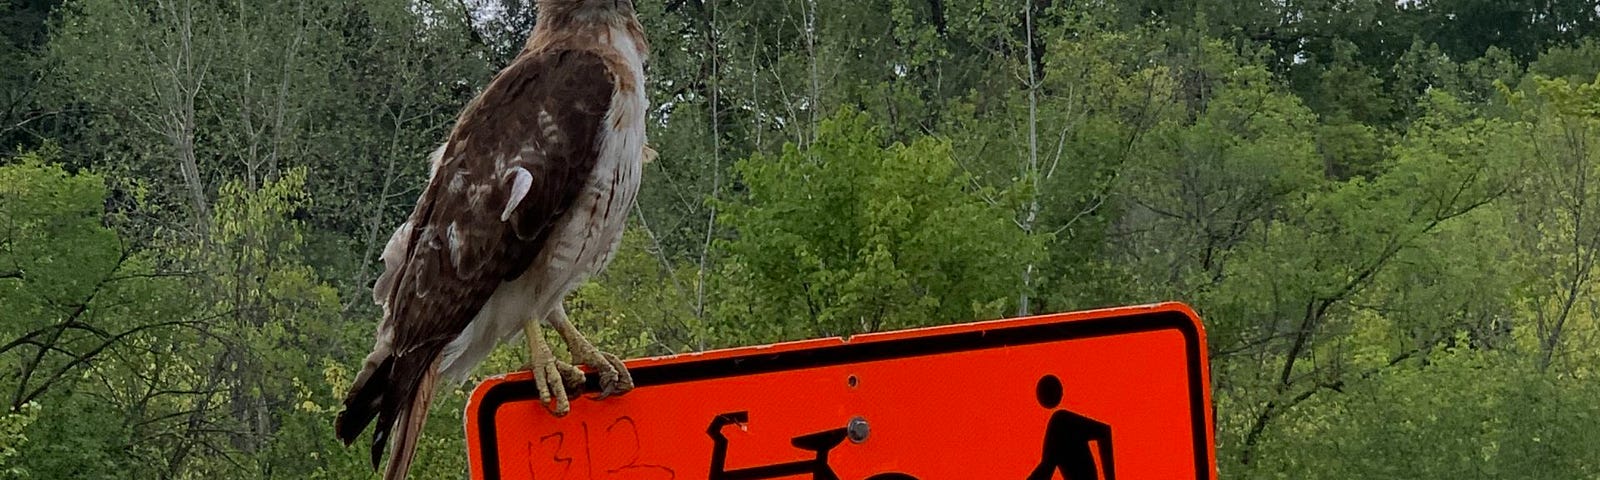 Baby hawk standing on an orange detour sign